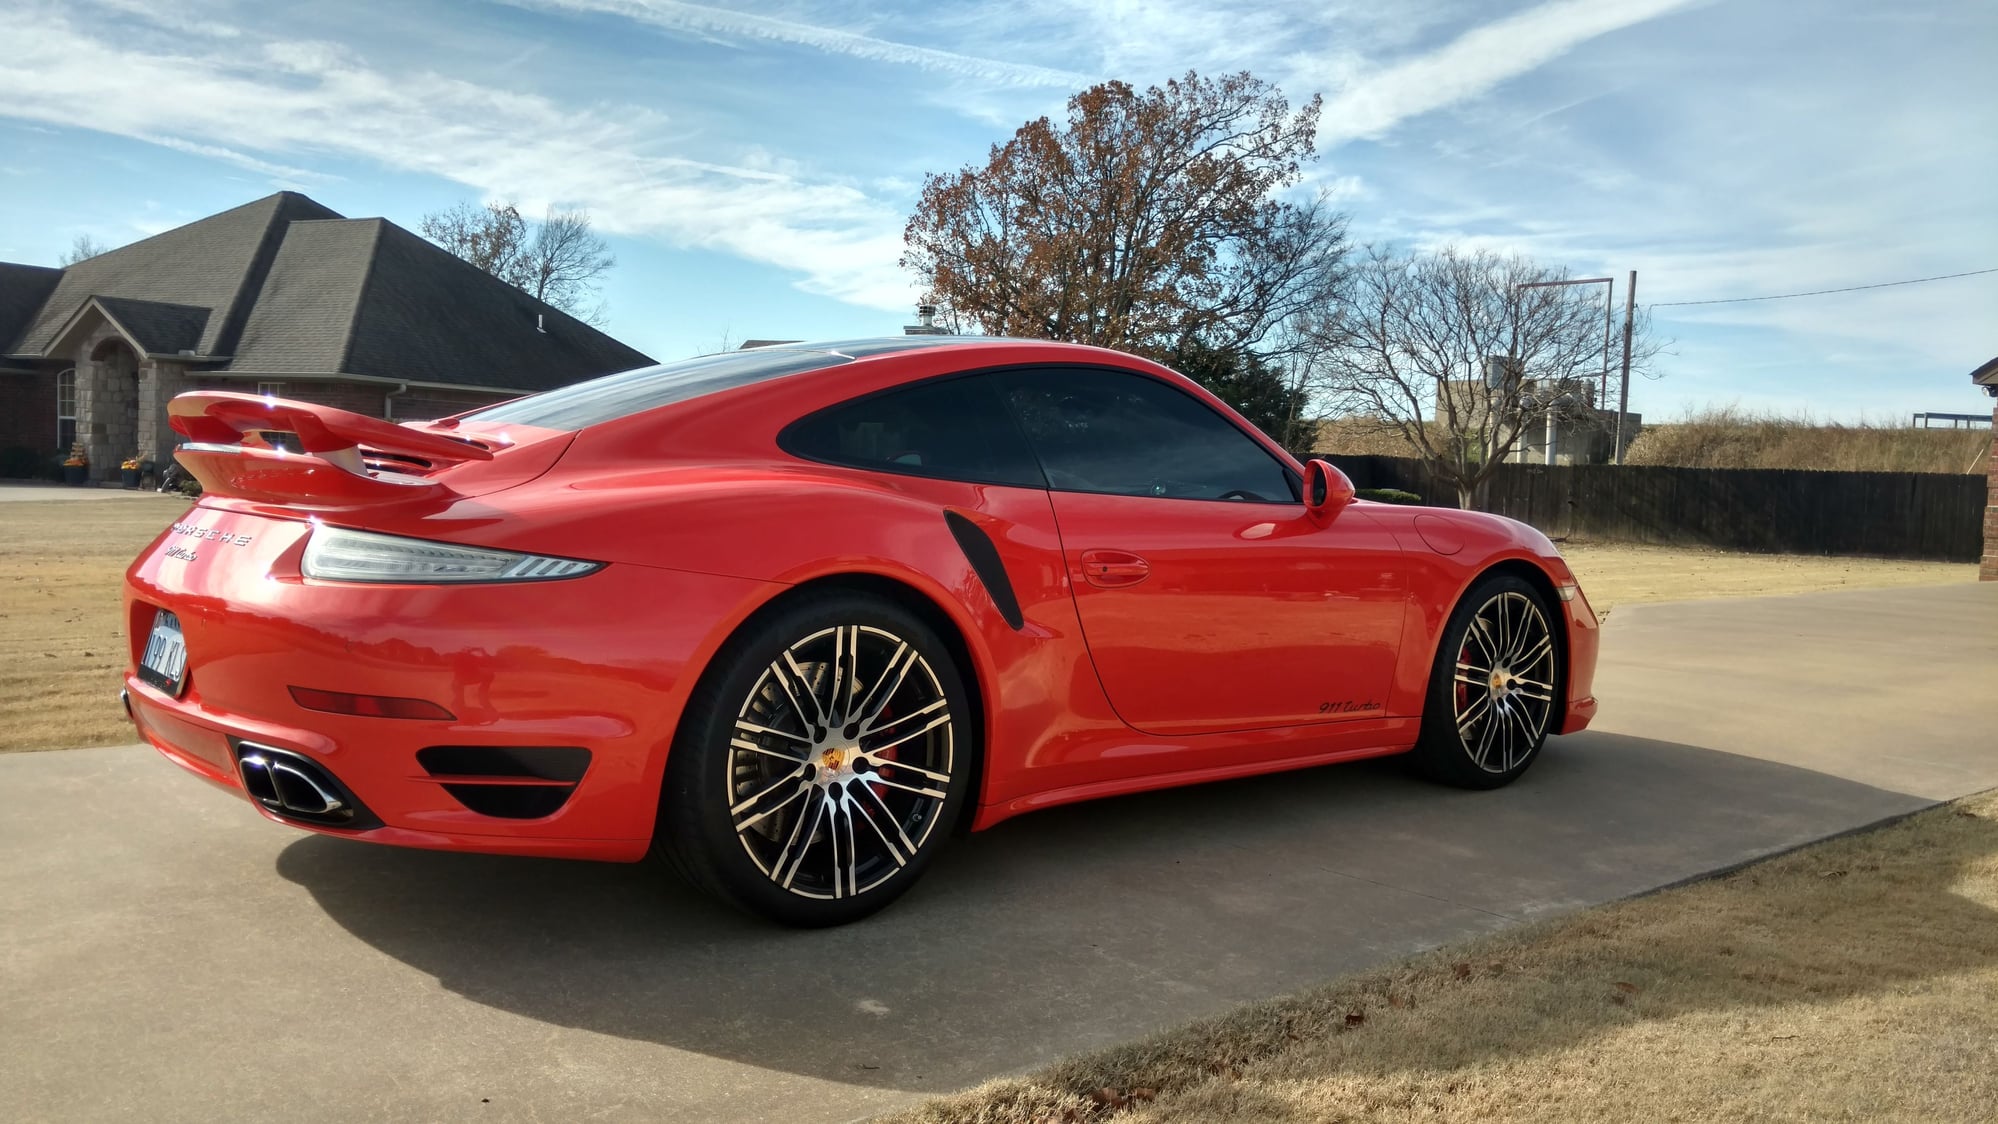 2016 Porsche 911 - 2016 Lava Orange Porsche 911 Turbo - Used - VIN WP0AD2A95GS166093 - 23,700 Miles - 6 cyl - AWD - Automatic - Coupe - Orange - Tahlequah, OK 74464, United States